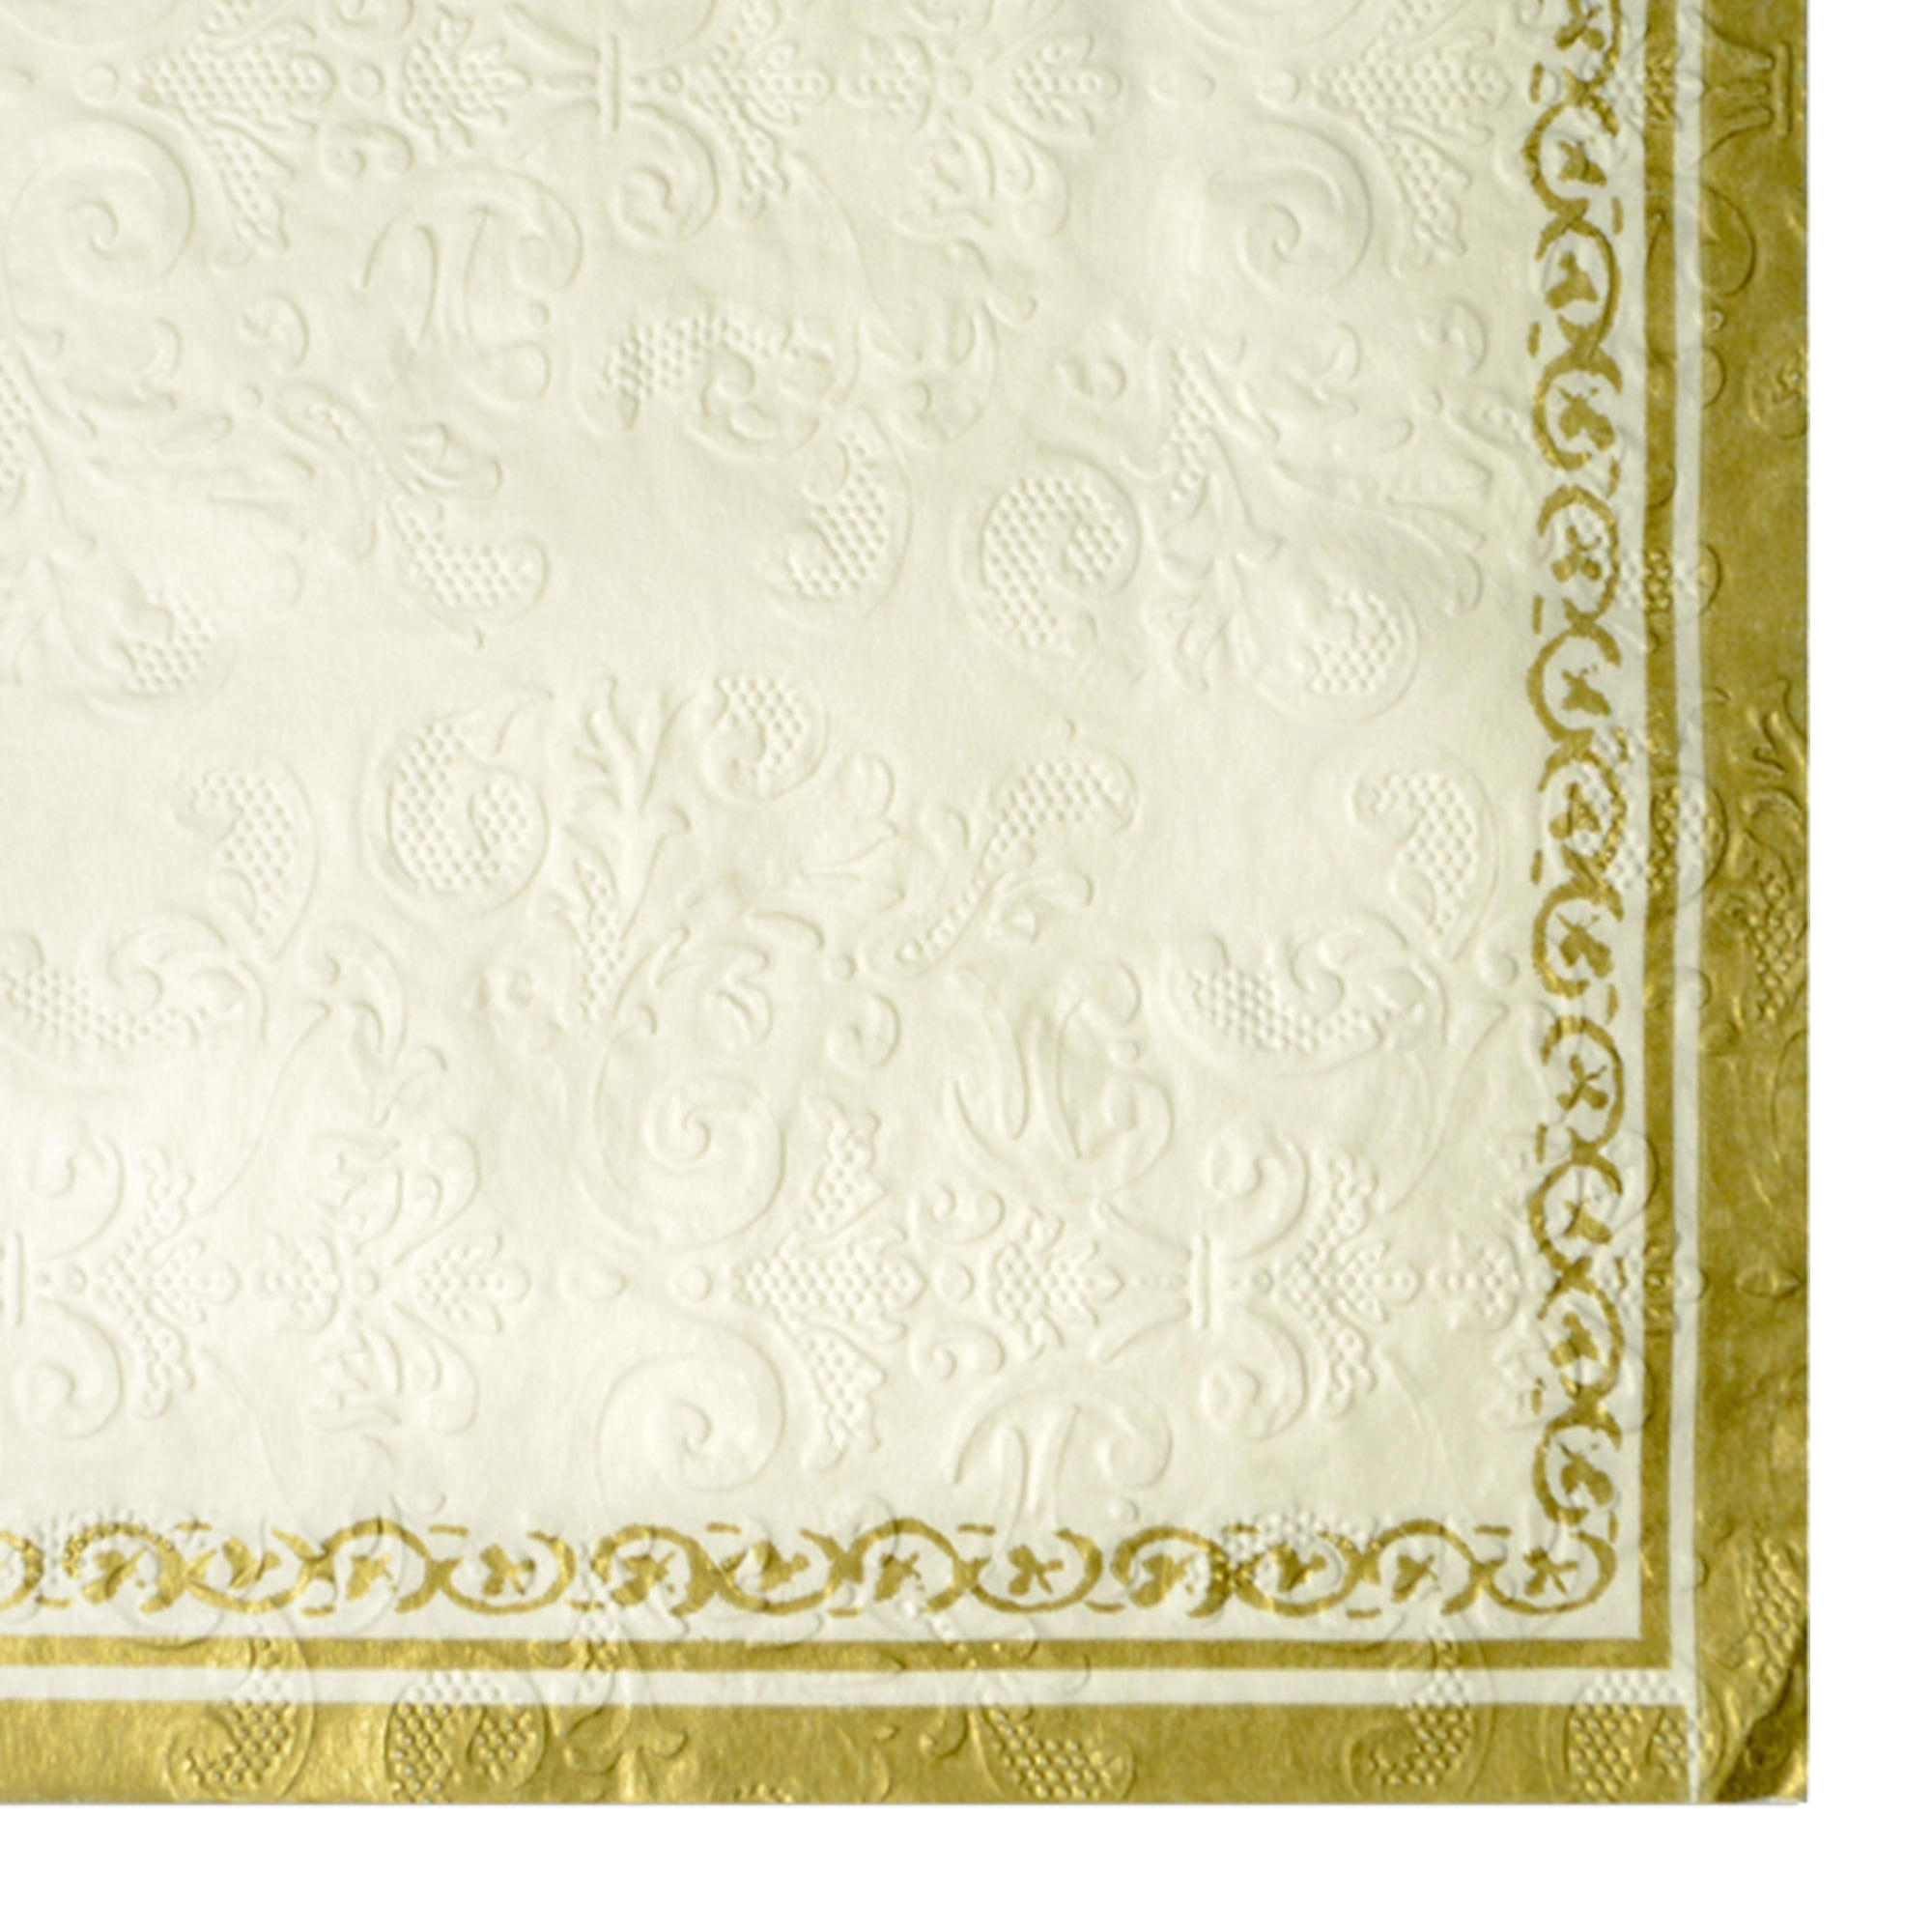 Casa Regalo 3ply Embossed Napkin 20pk White/Gold Image 2